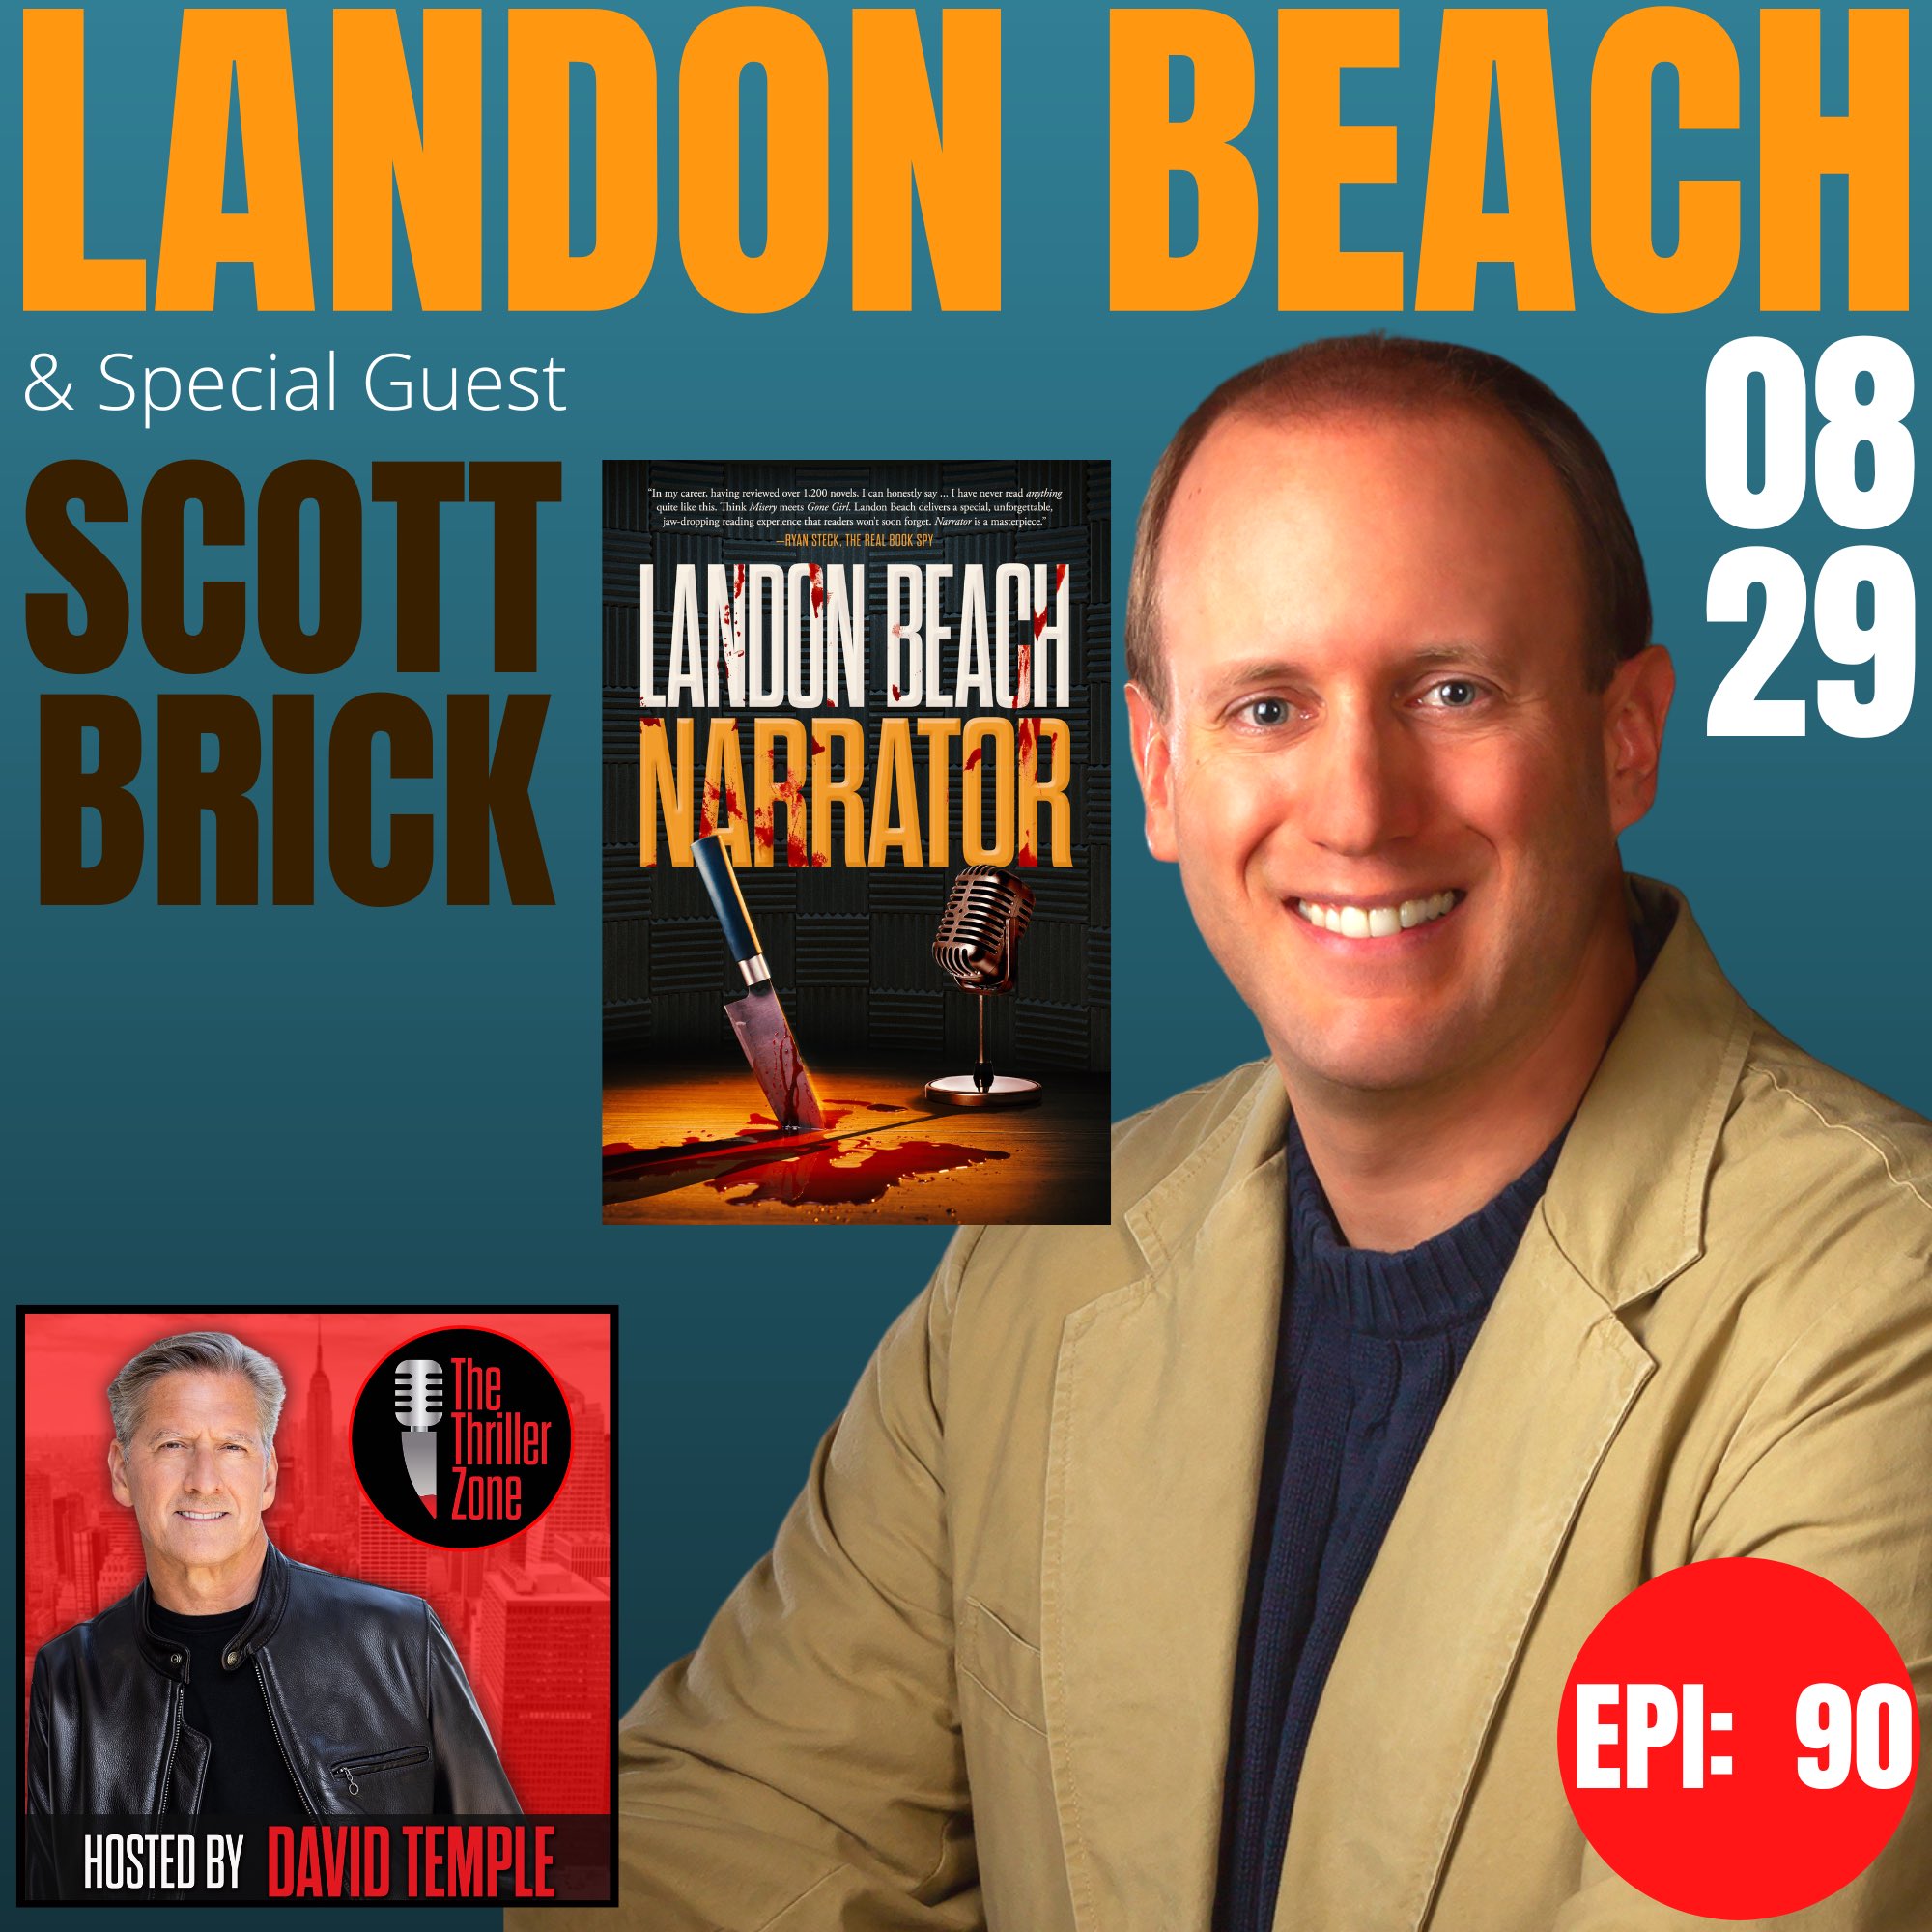 Landon Beach, author of Narrator